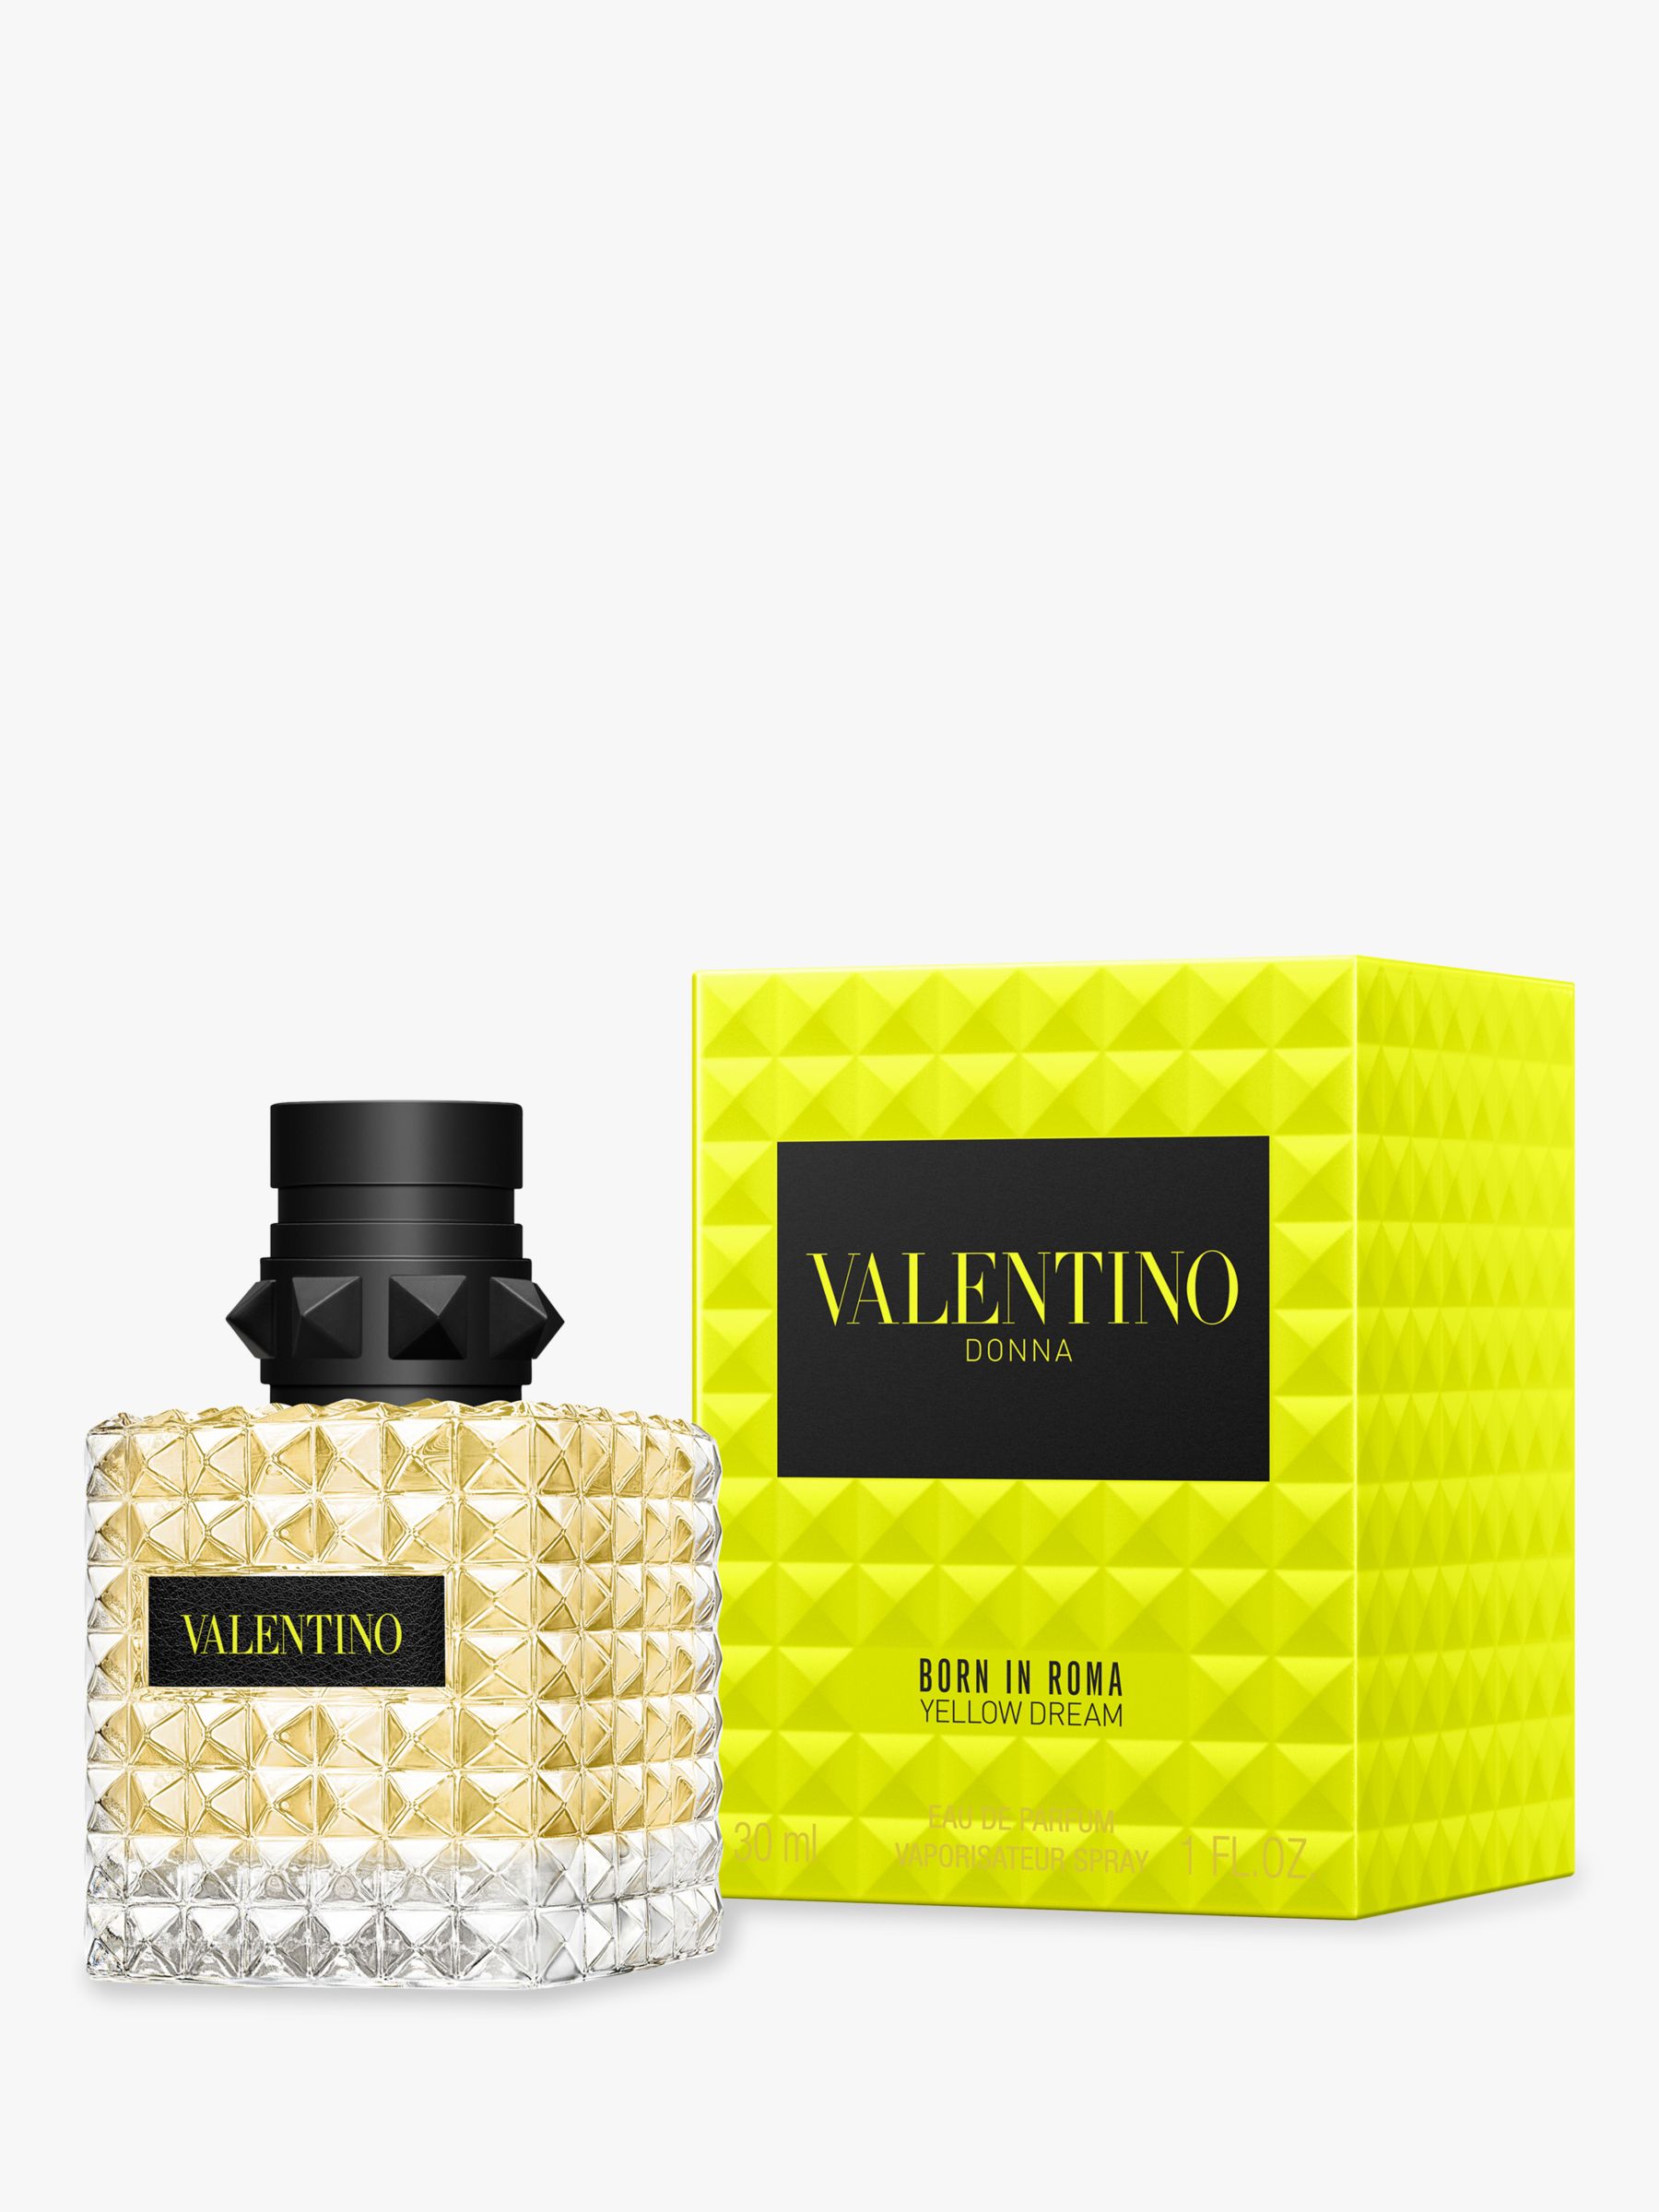 Valentino Born in Roma Yellow Dream For Her Eau de Parfum, 30ml 2